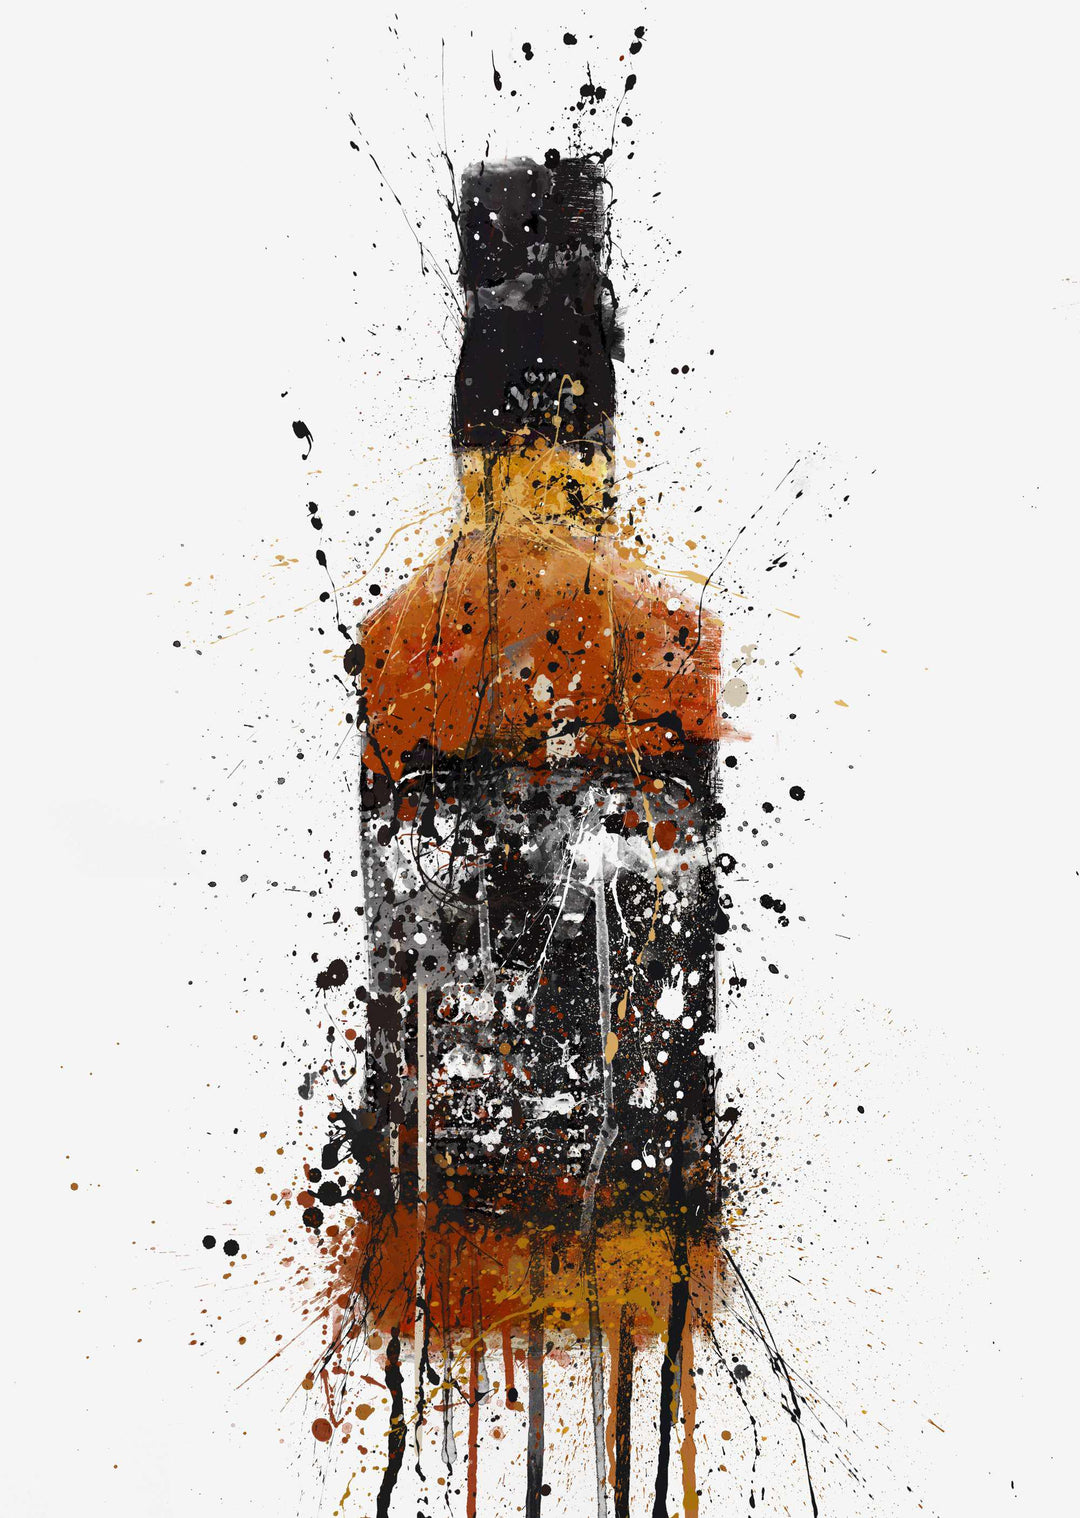 Whiskey Bottle Wall Art Print 'Umber'-We Love Prints